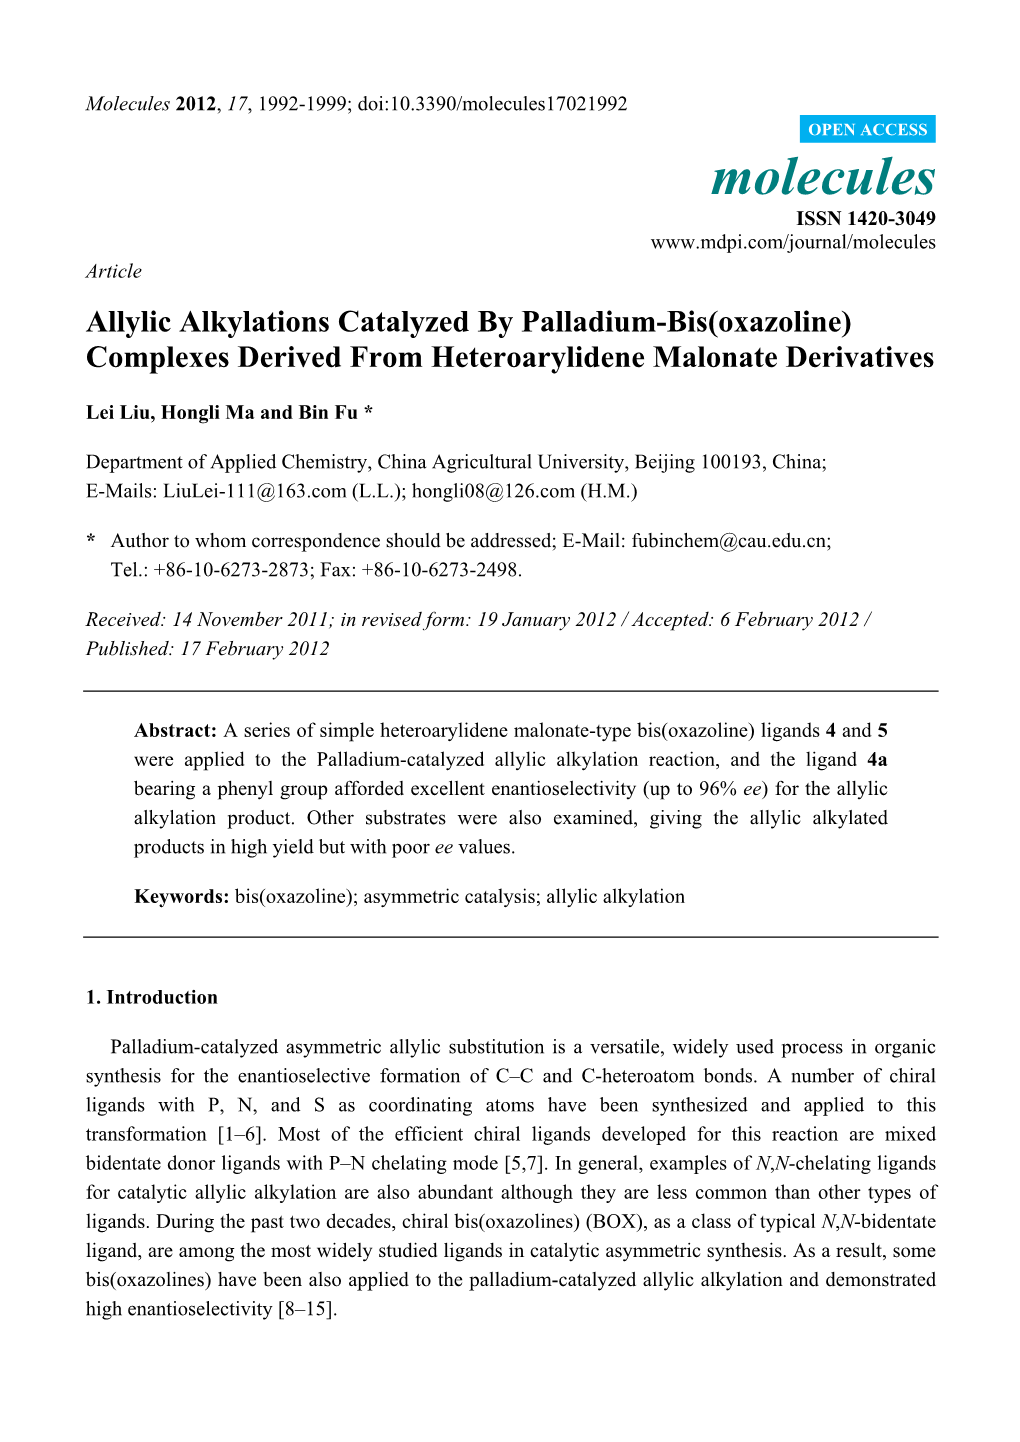 Allylic Alkylations Catalyzed by Palladium-Bis(Oxazoline) Complexes Derived from Heteroarylidene Malonate Derivatives